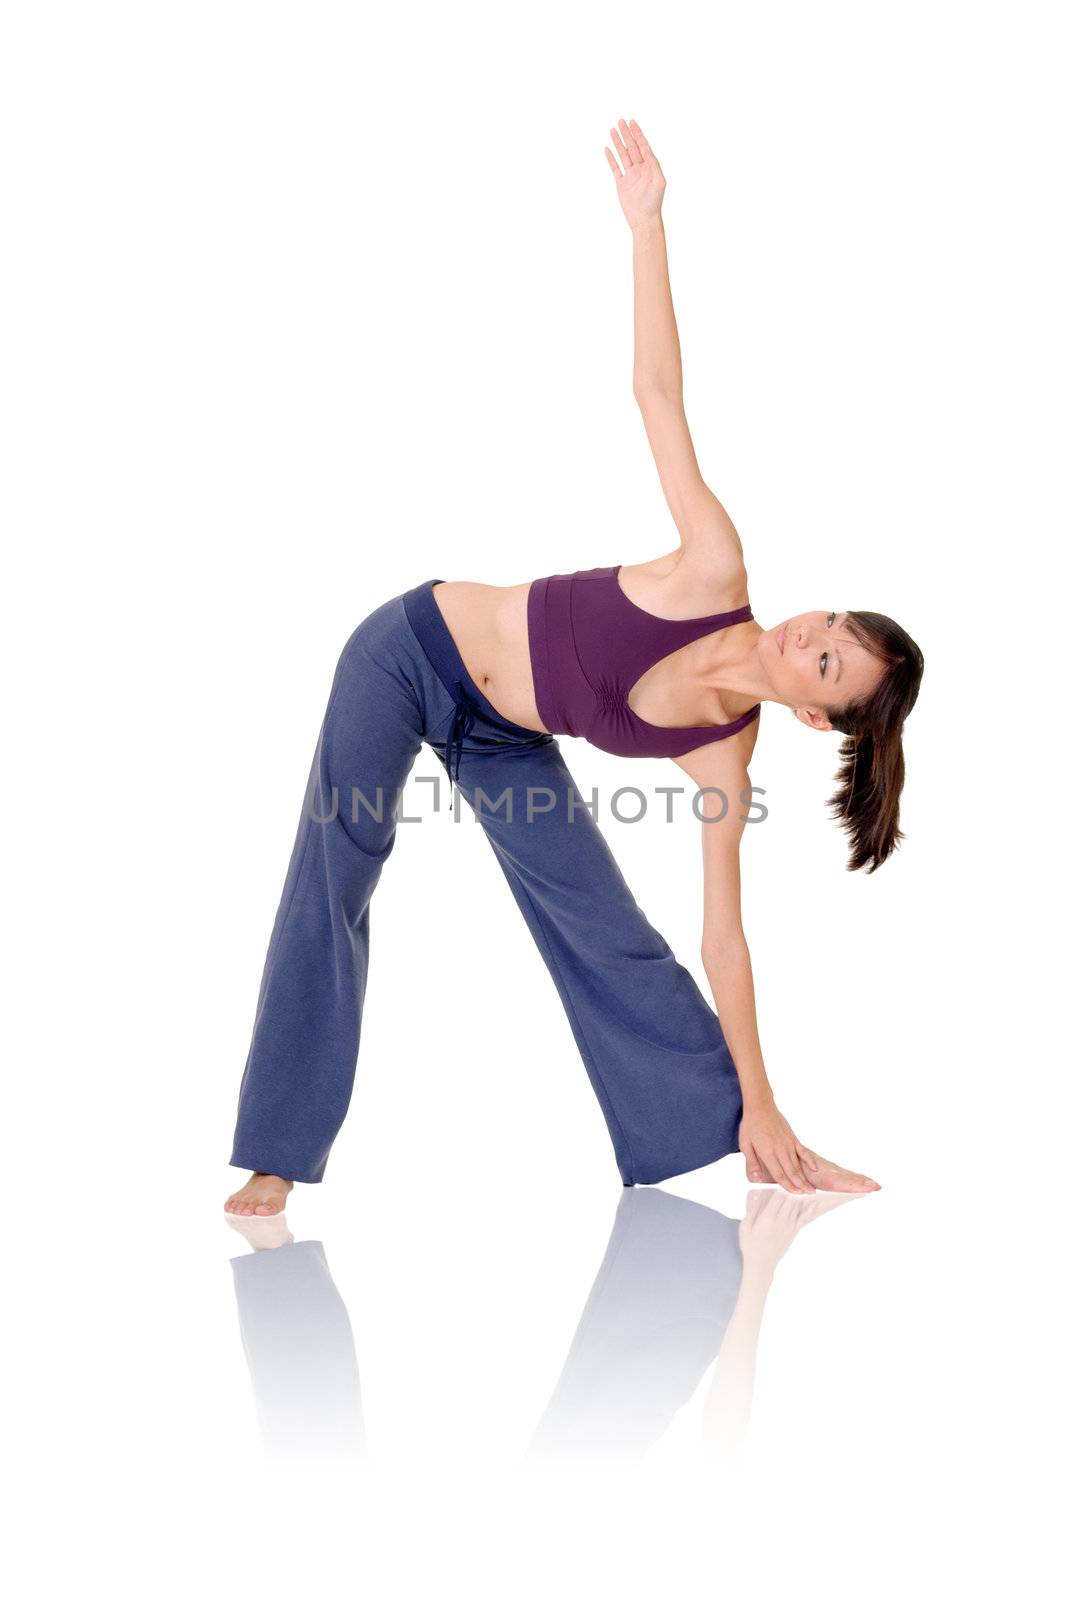 Asian woman of fitness doing expert yoga pose, full length portrait isolated on white background.